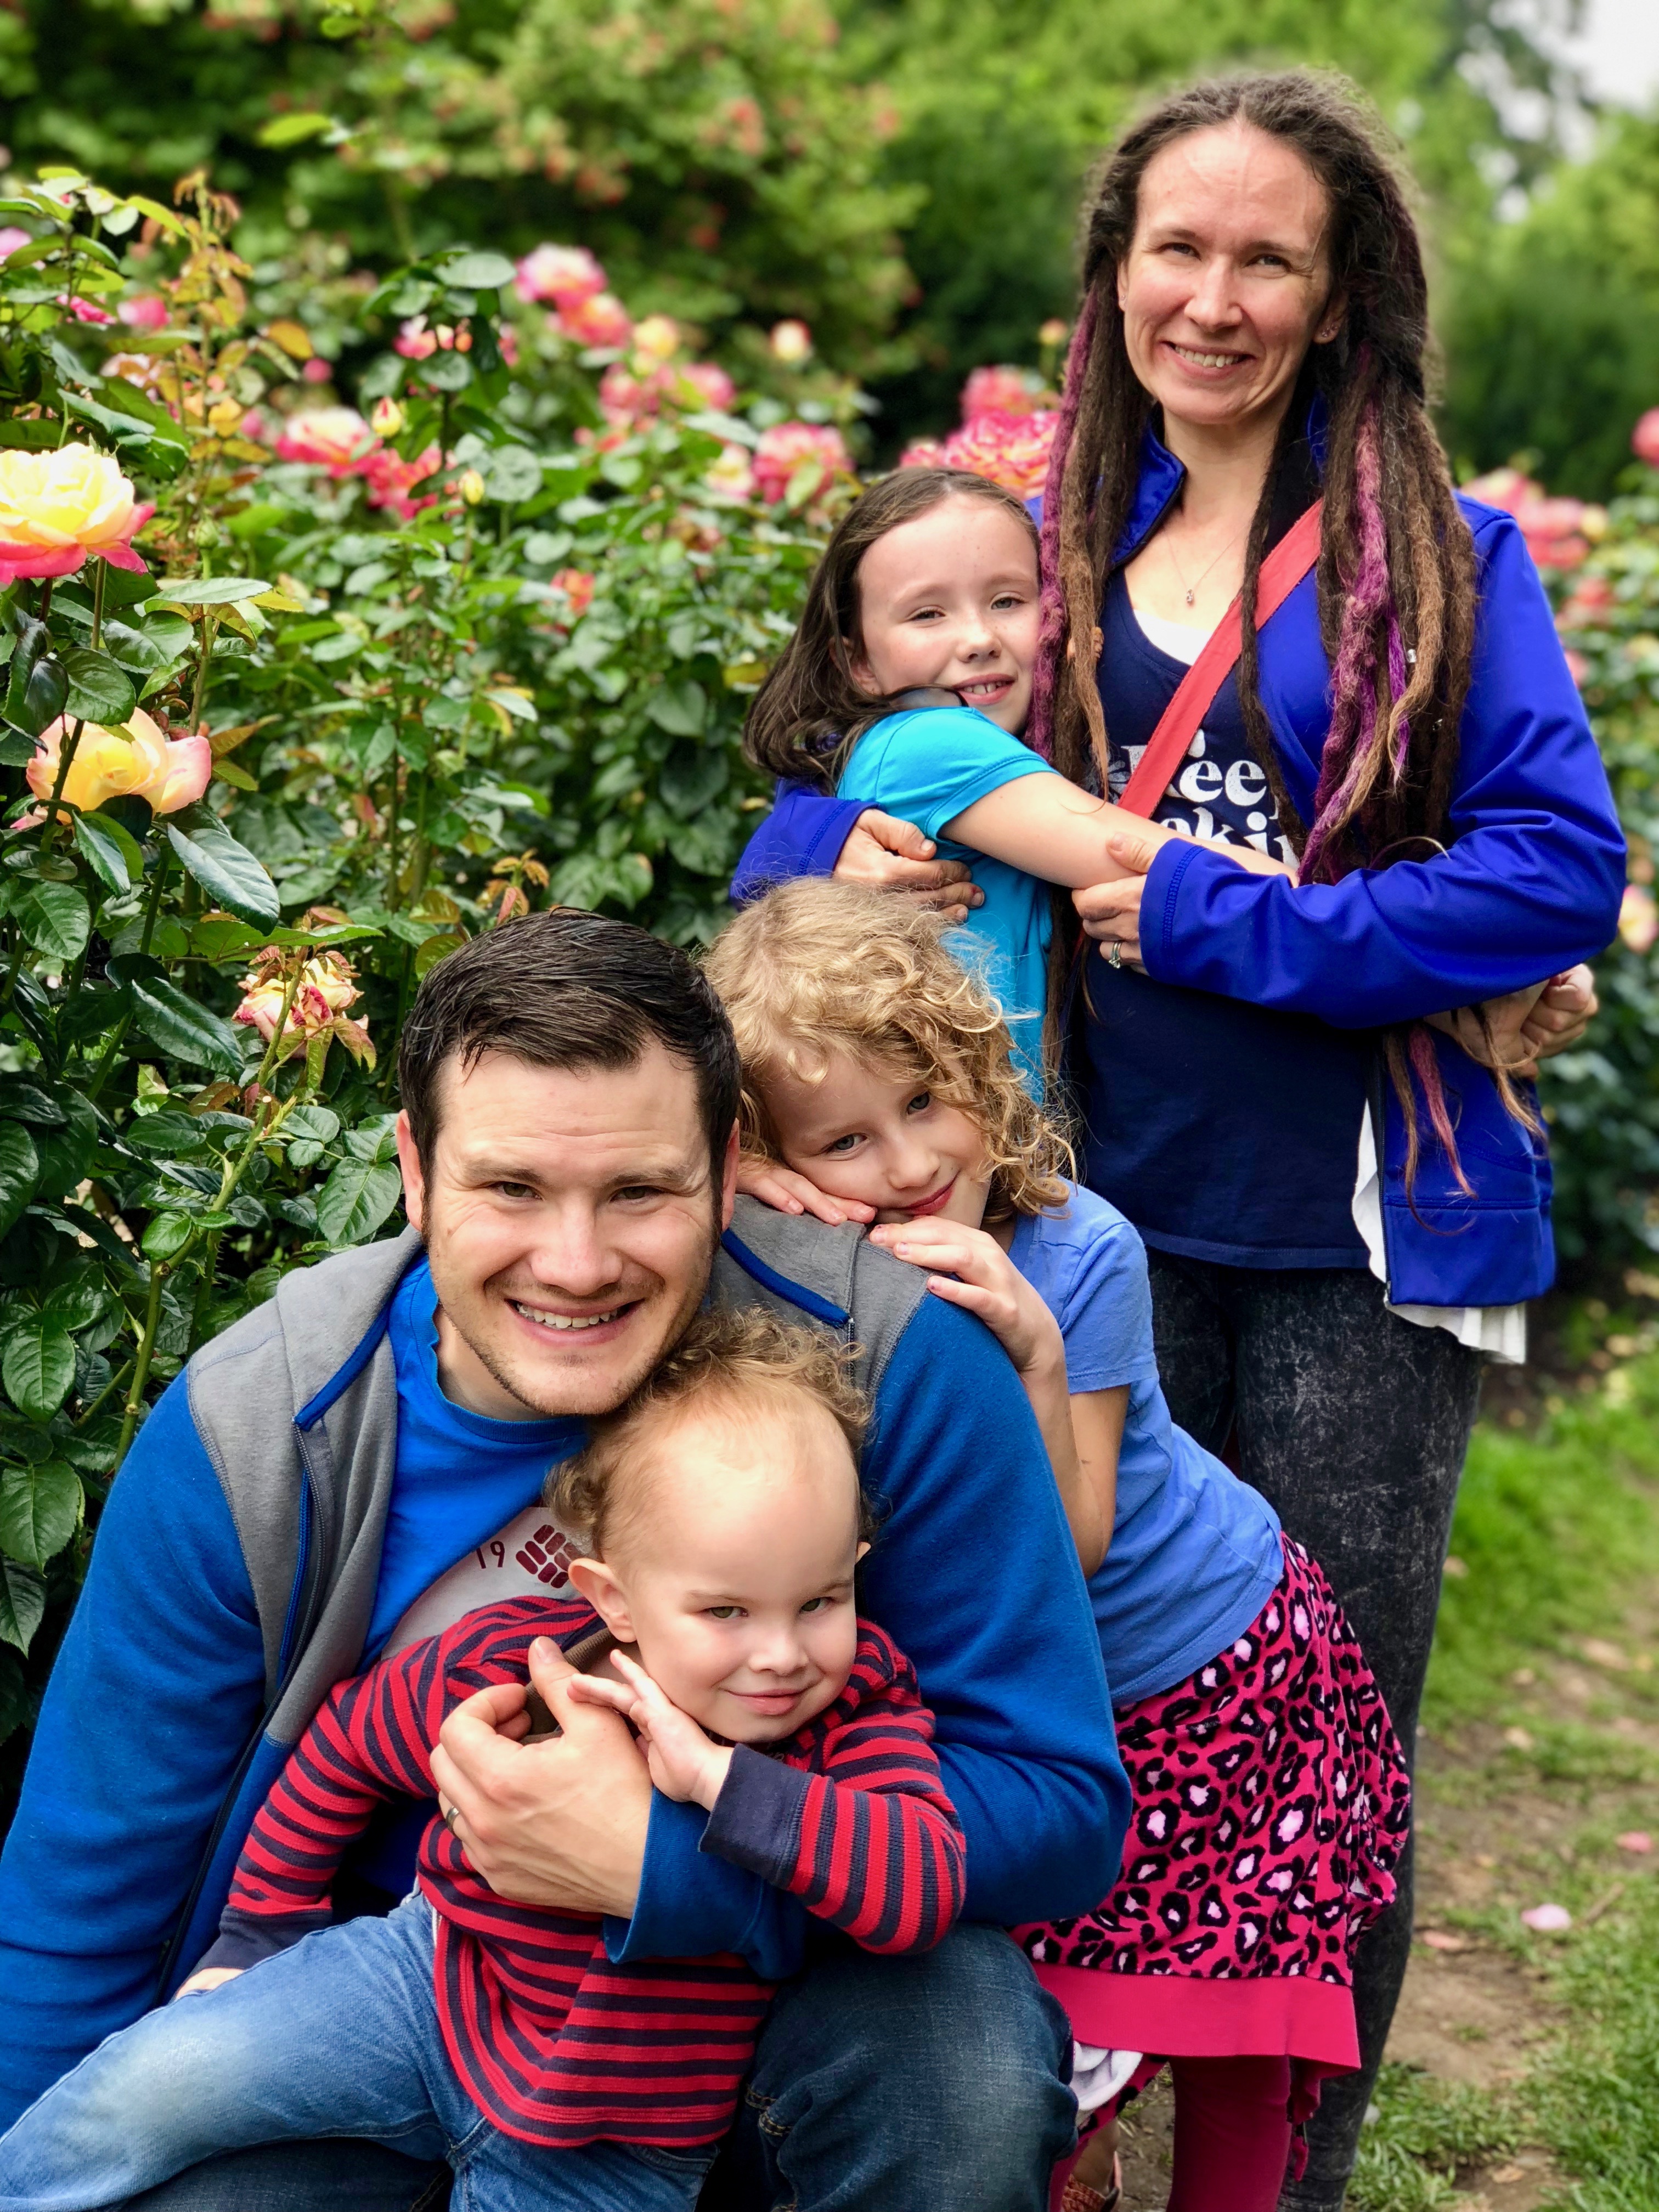 Nathan & Barbi Carr with their three cute children, Annabella, Eliza and Hosea. A wonderful family!